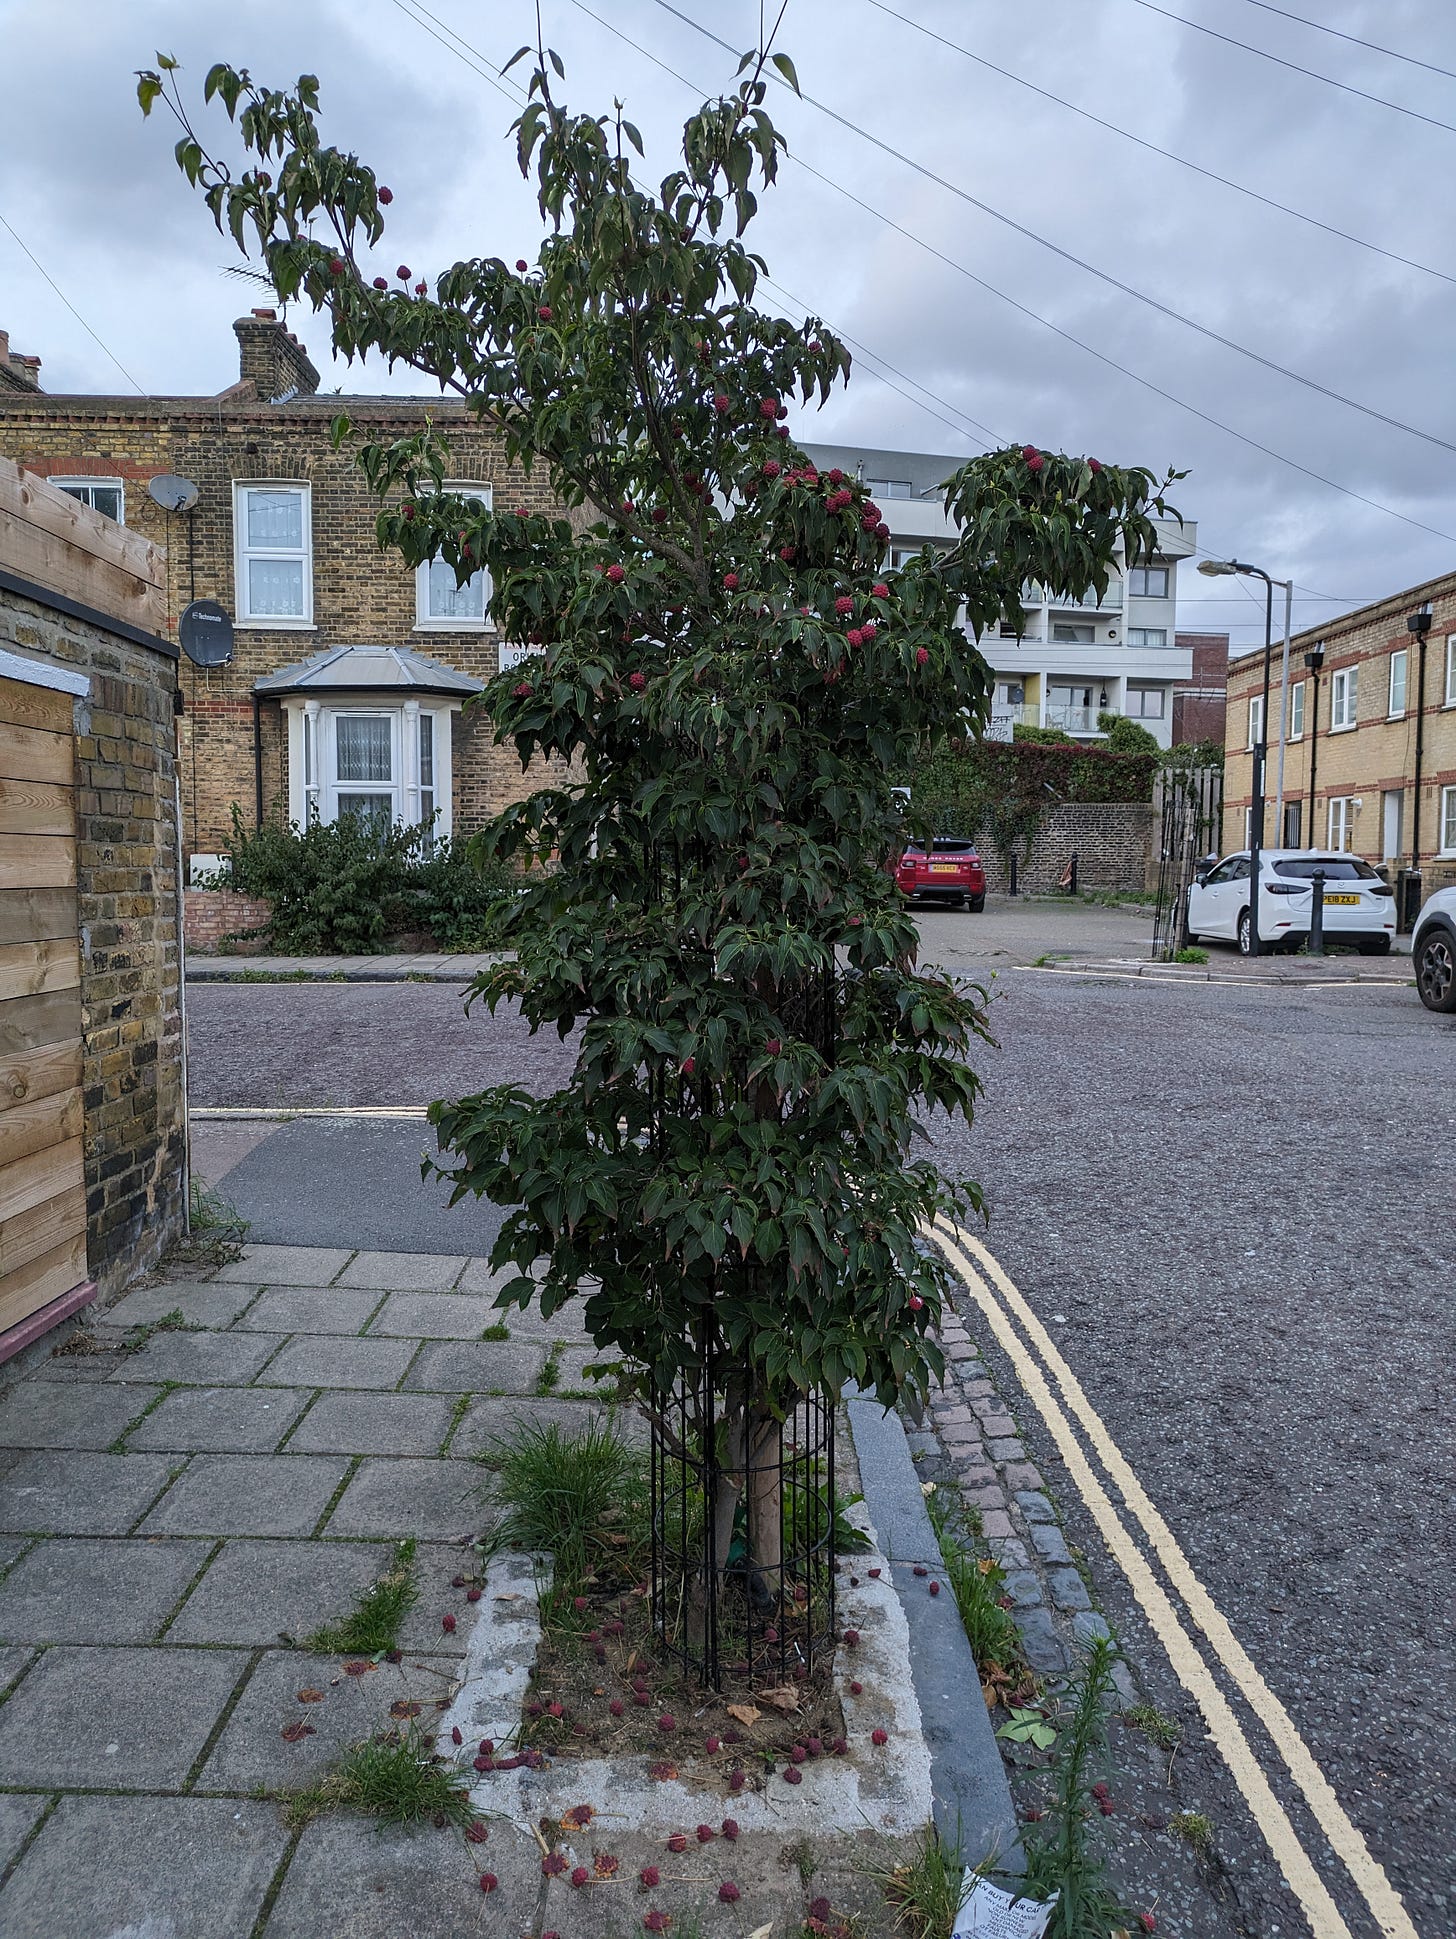 A photograph of a Kousa Dogwood tree on a street corner